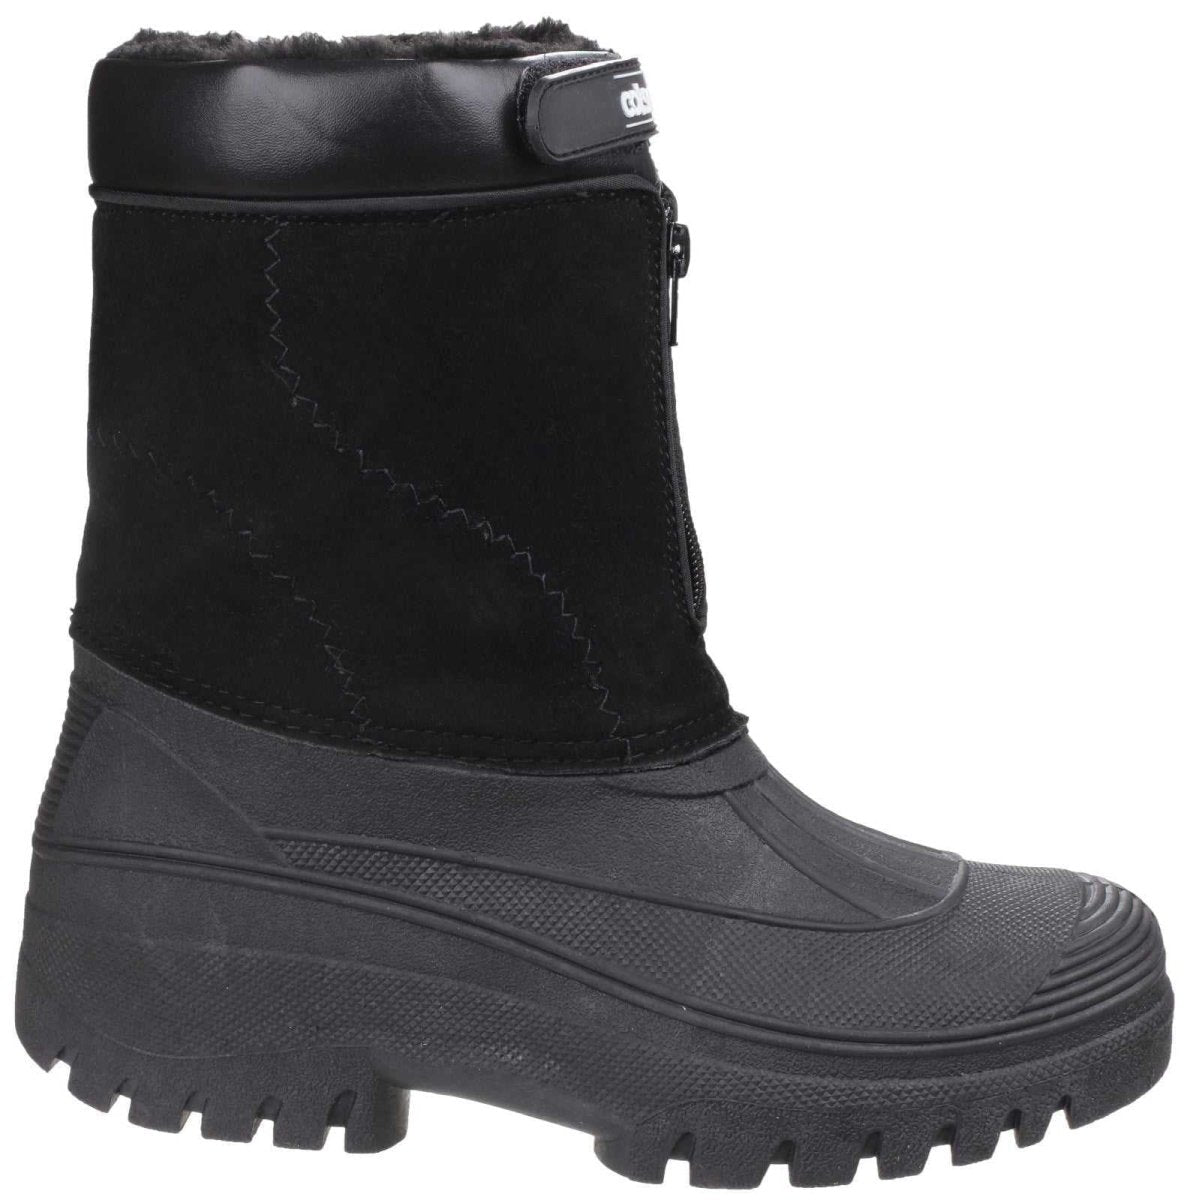 Cotswold Venture Waterproof Weather Wellingtons - Shoe Store Direct